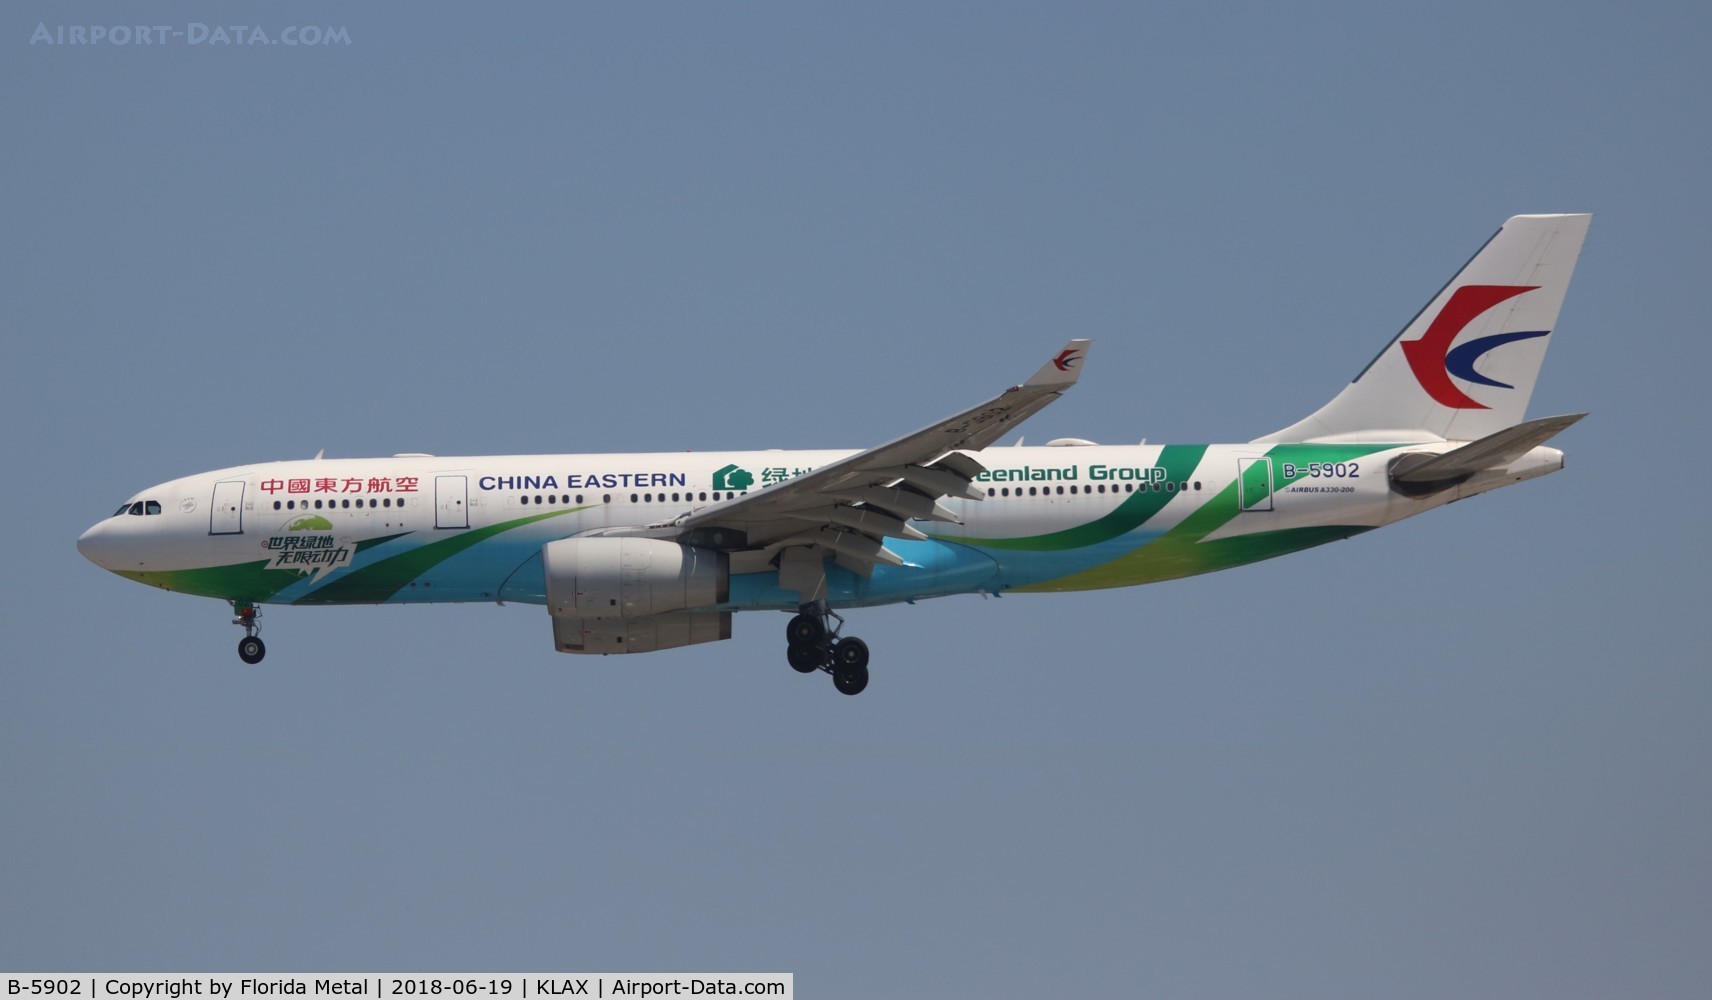 B-5902, 2012 Airbus A330-243 C/N 1324, China Eastern A332 zx